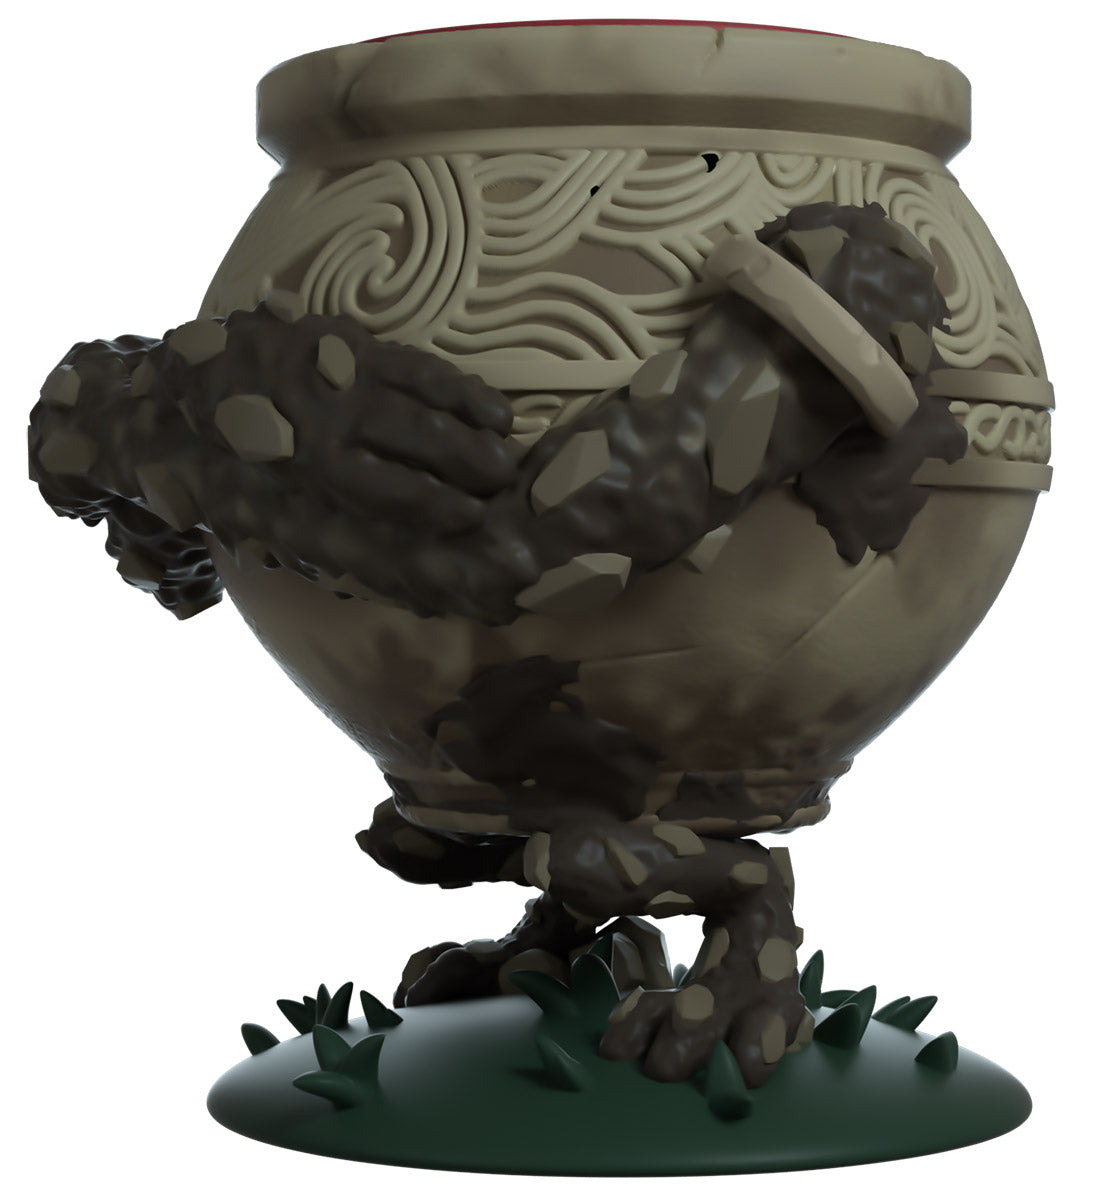 3D print Pot Boy, Iron Fist Alexander